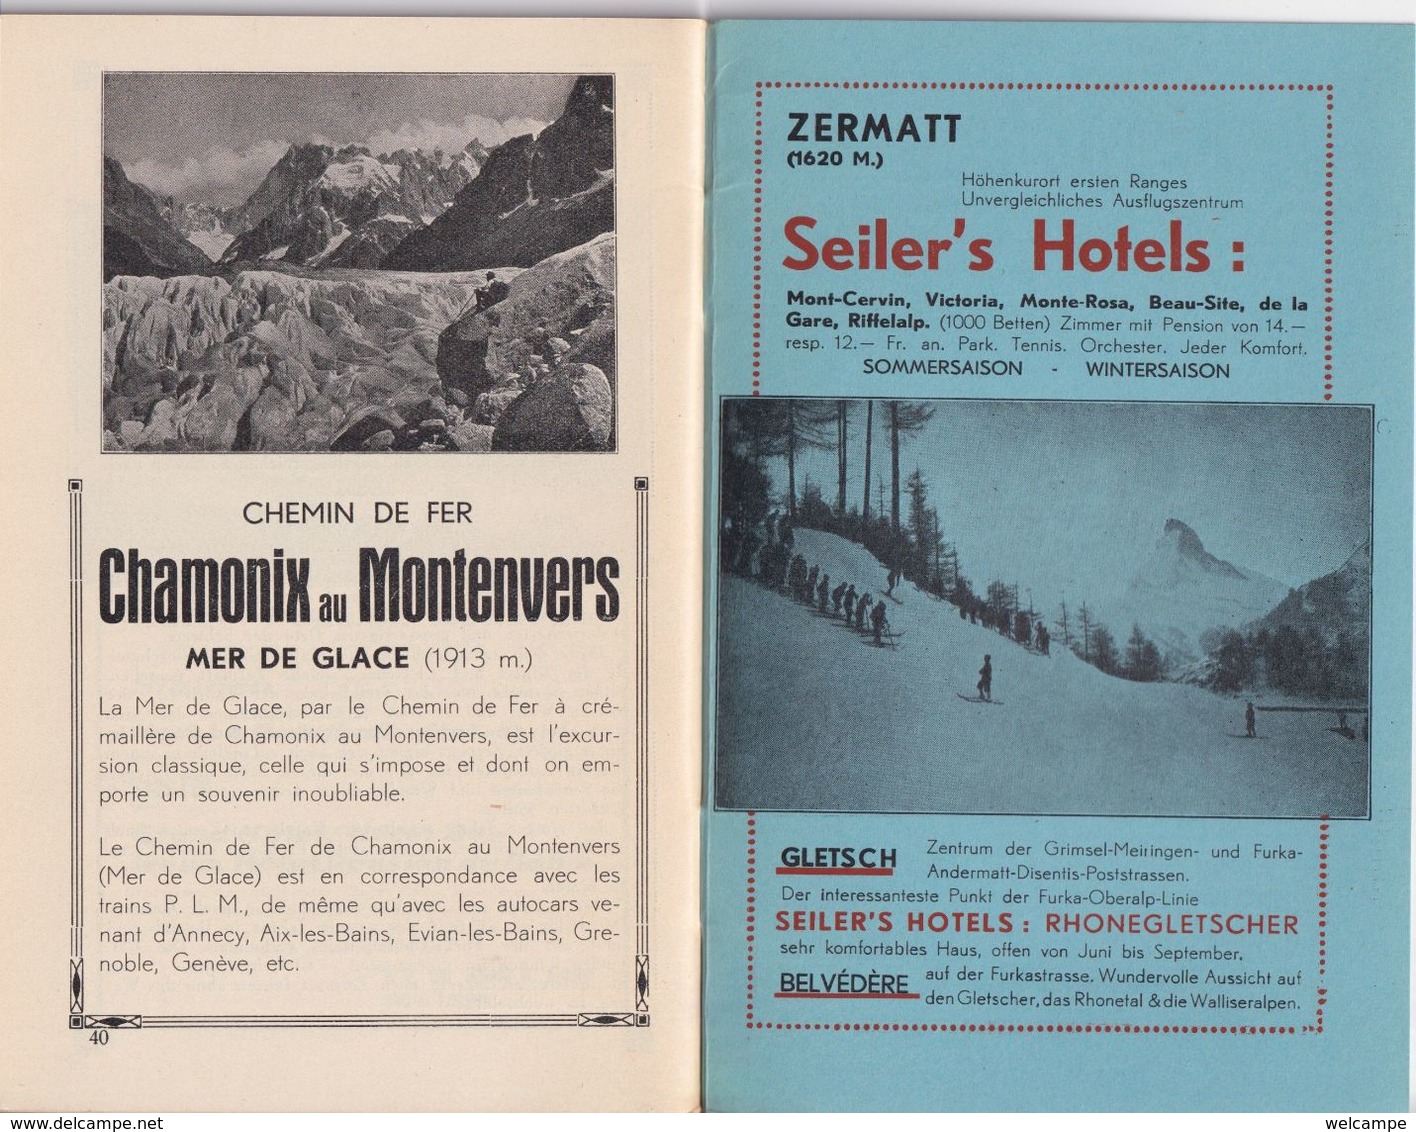 OLD BROCHURE - LEAFLET - SWITZERLAND -   MARTIGNY - CHAMONIX - 40 PAGES -  11 X 17 CM